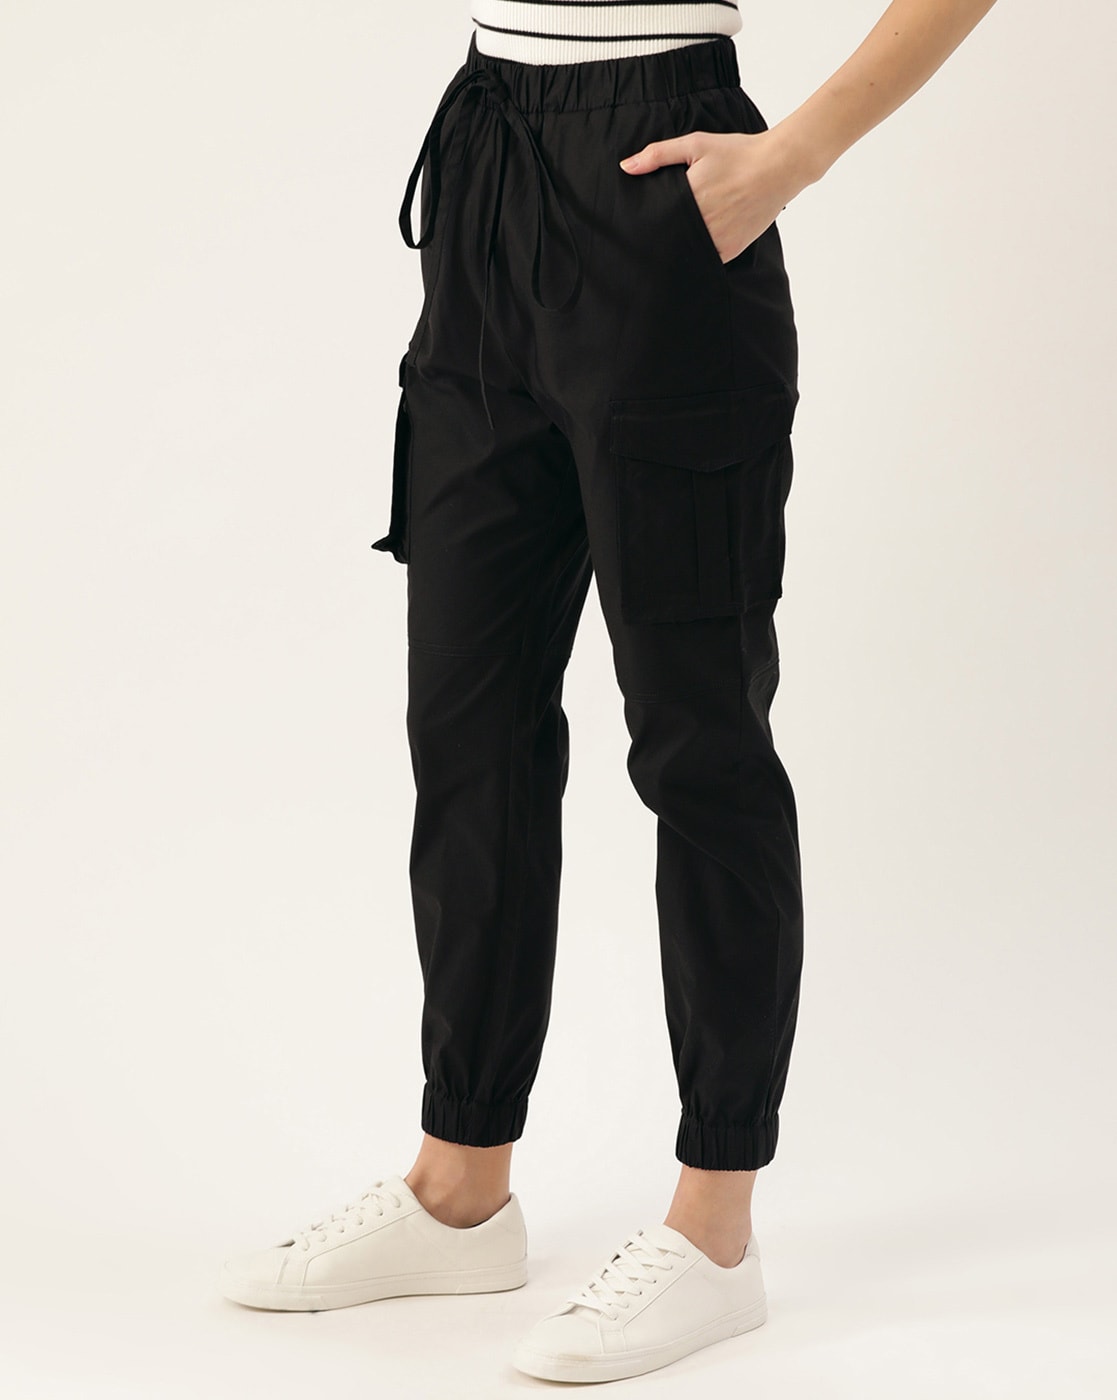 Buy Khaki Trousers & Pants for Men by AJIO Online | Ajio.com